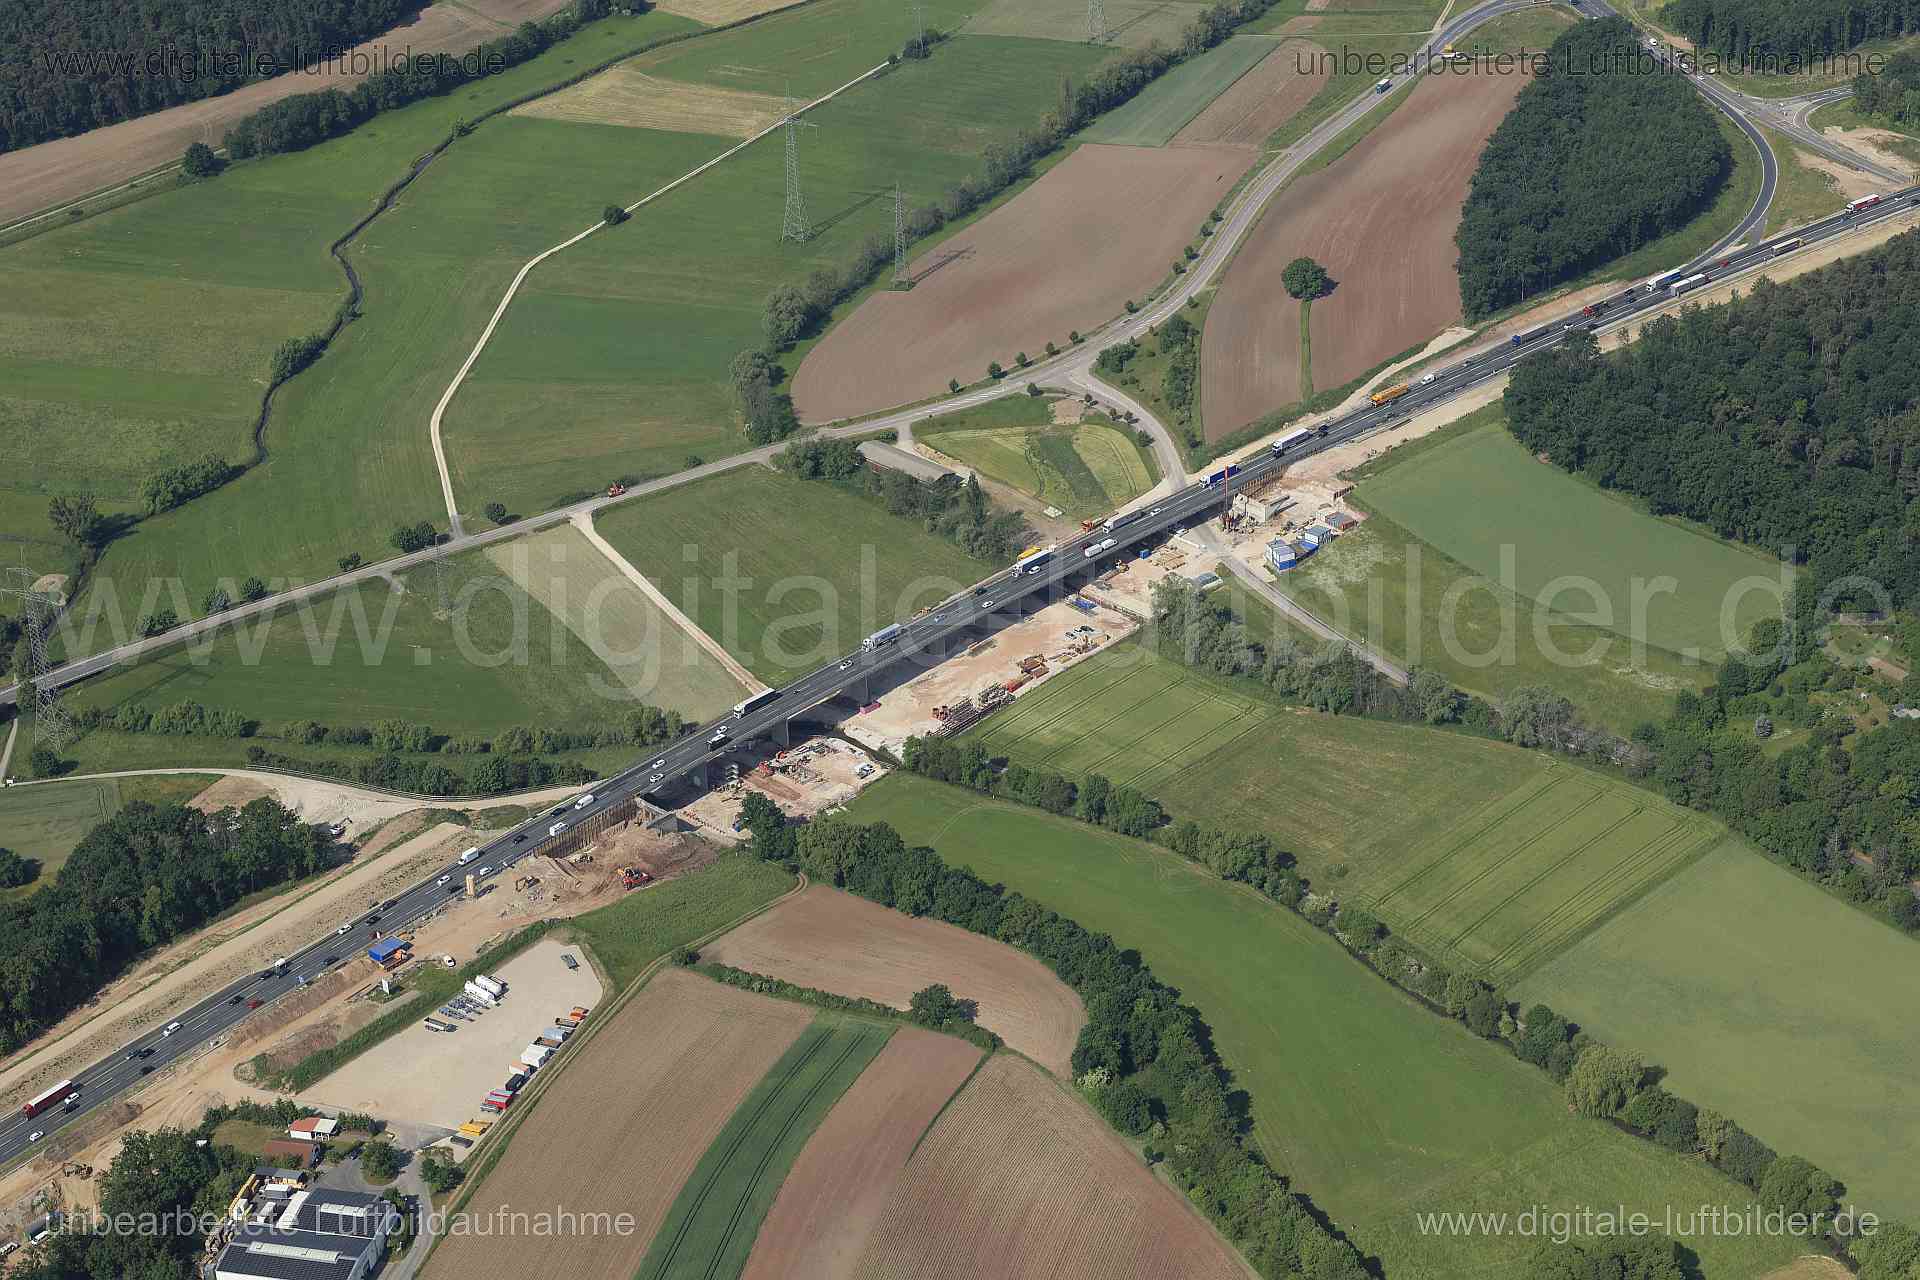 Luftbild - Aurachtalbrücke, Ort: Frauenaurach, Tags: Aurachtalbrücke, Baustelle, Autobahn, Autobahn A3, BAB 3, ...